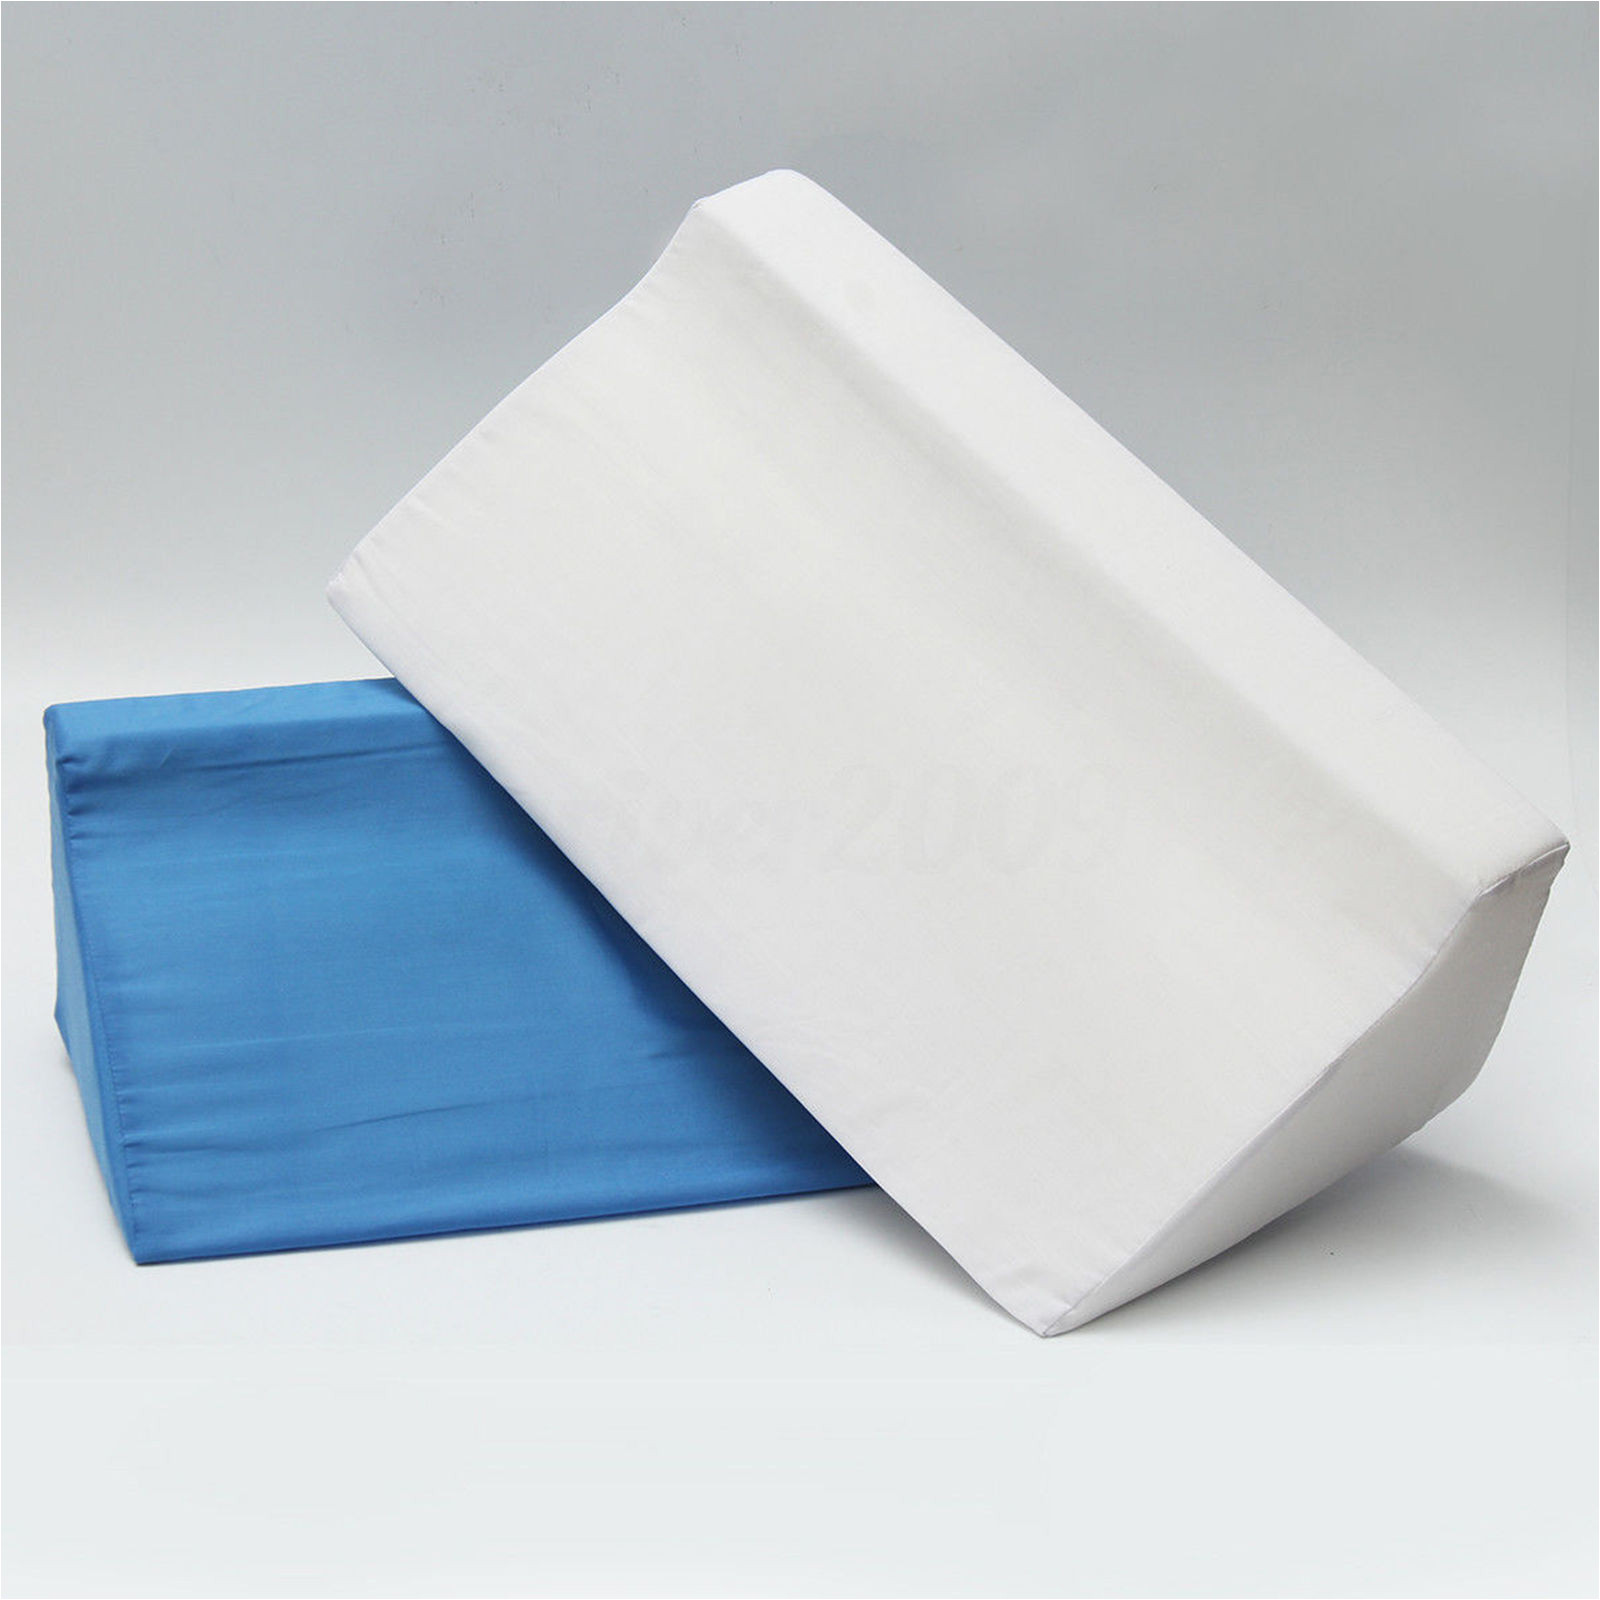 a 5 79 gbp acid reflux foam bed wedge pillow leg elevation back lumbar support cushion ebay home